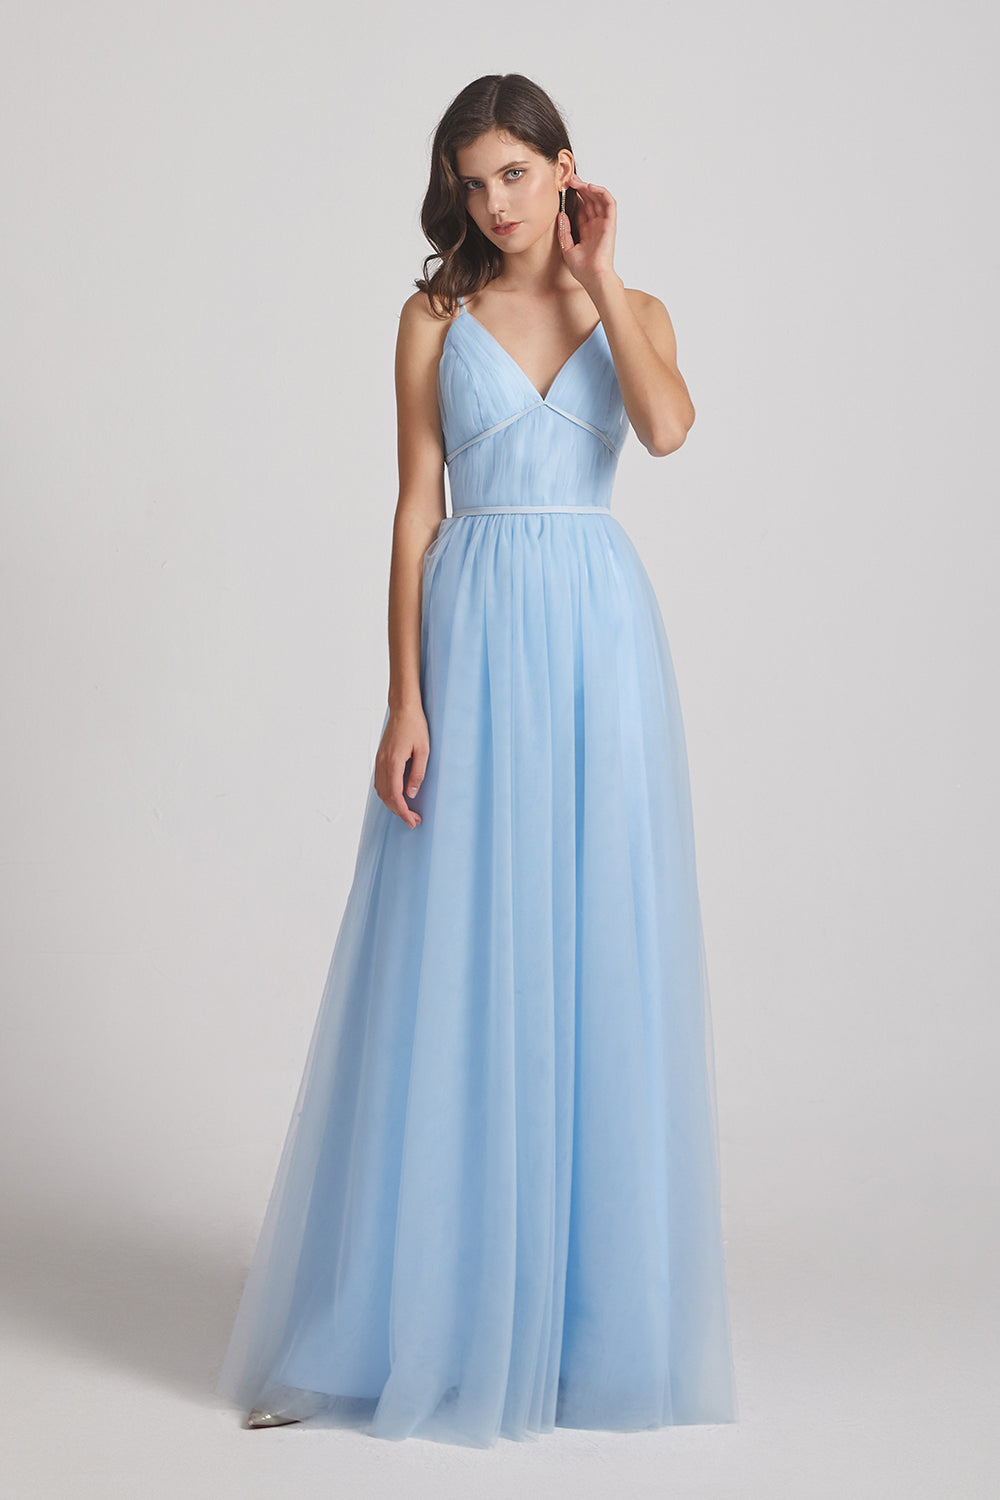 tull a-line floor length bridesmaid dresses